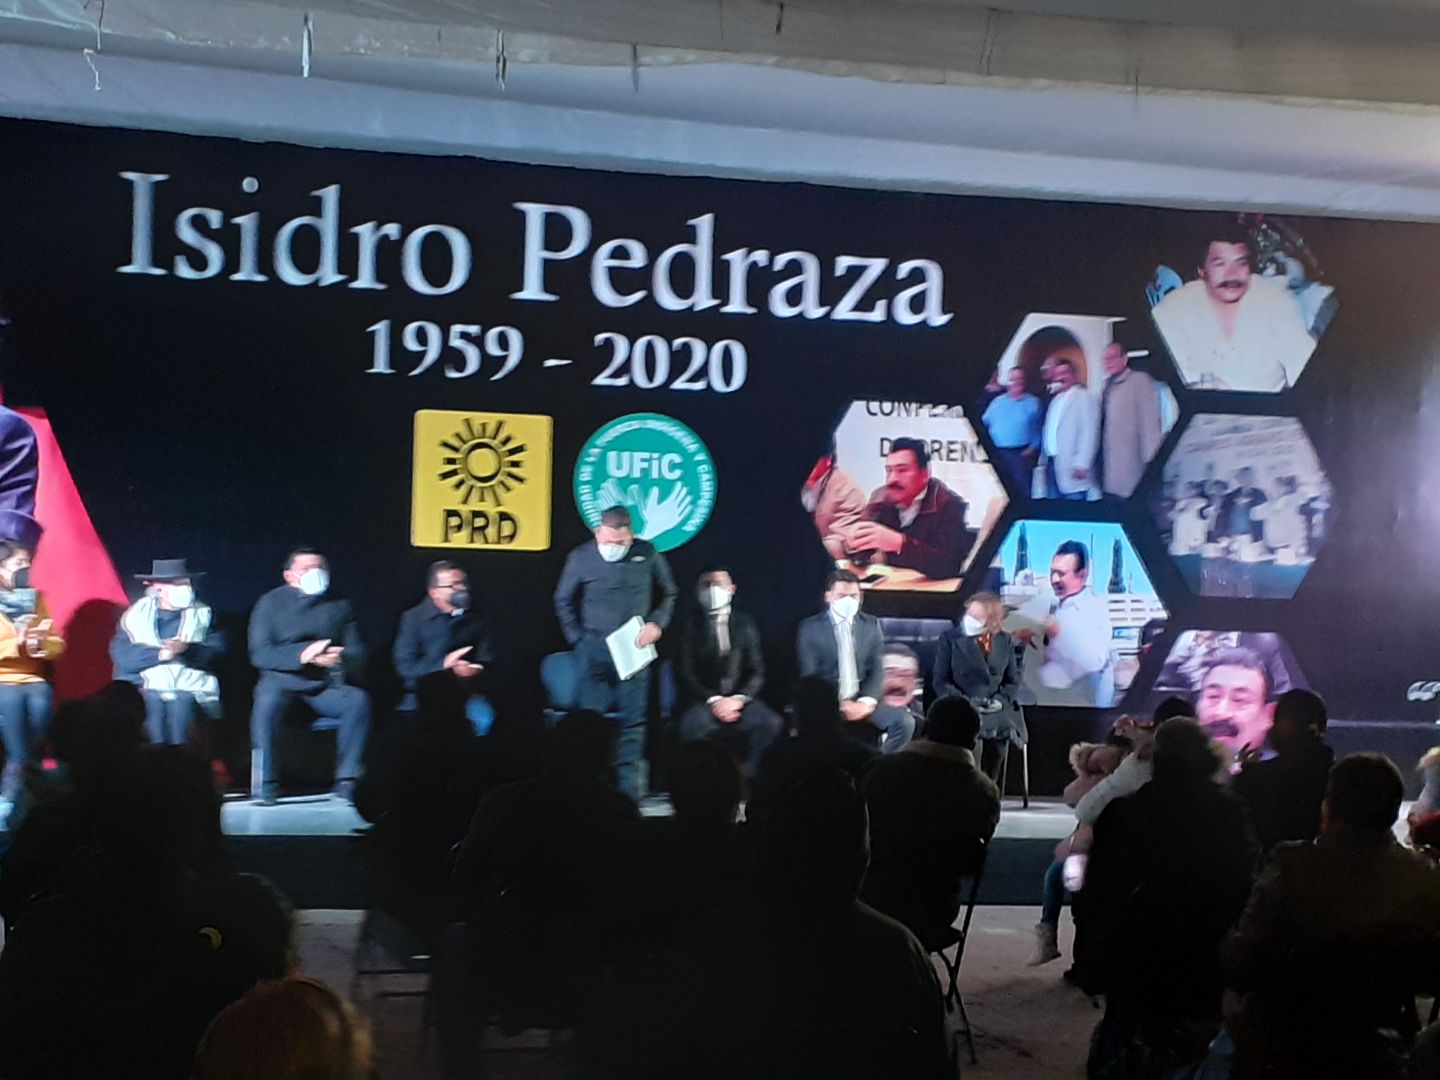 PRD y UFIC rinden homenaje póstumo a Isidro Pedraza